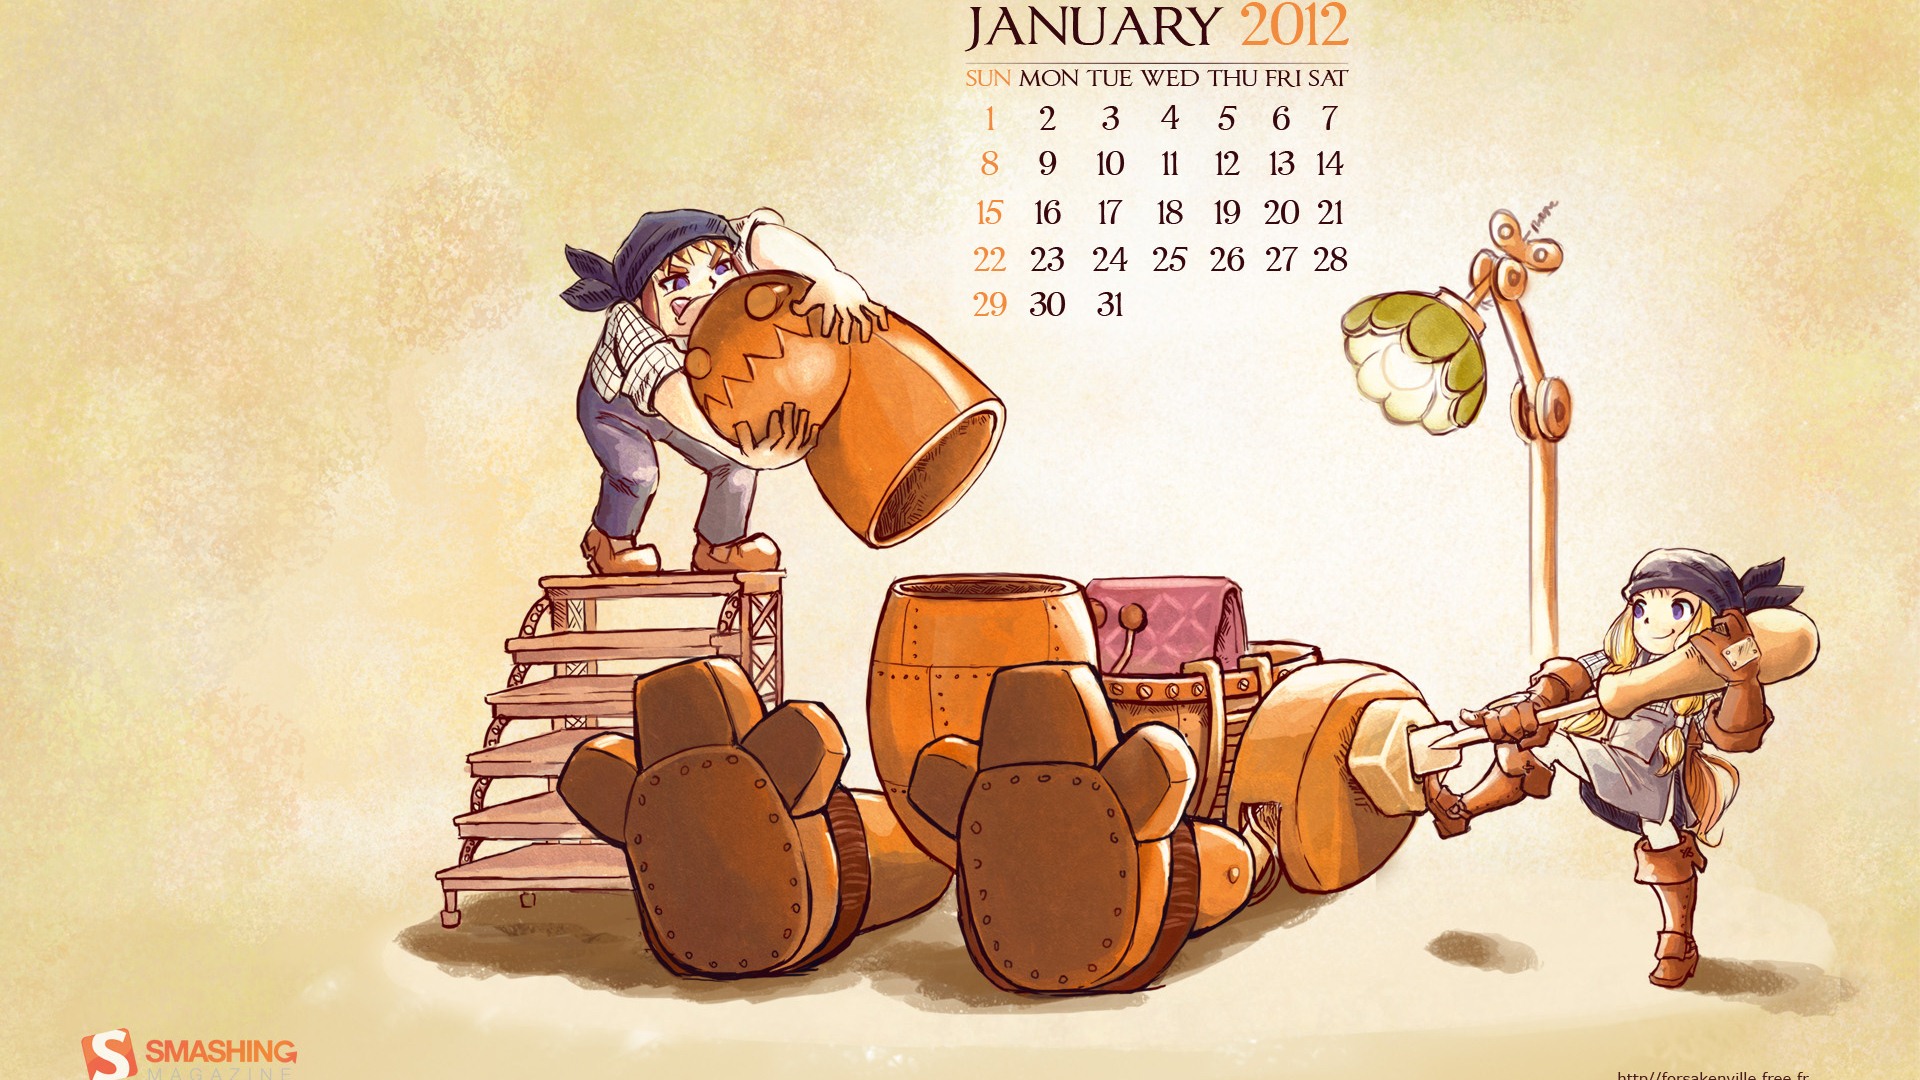 January 2012 Calendar Wallpapers #3 - 1920x1080